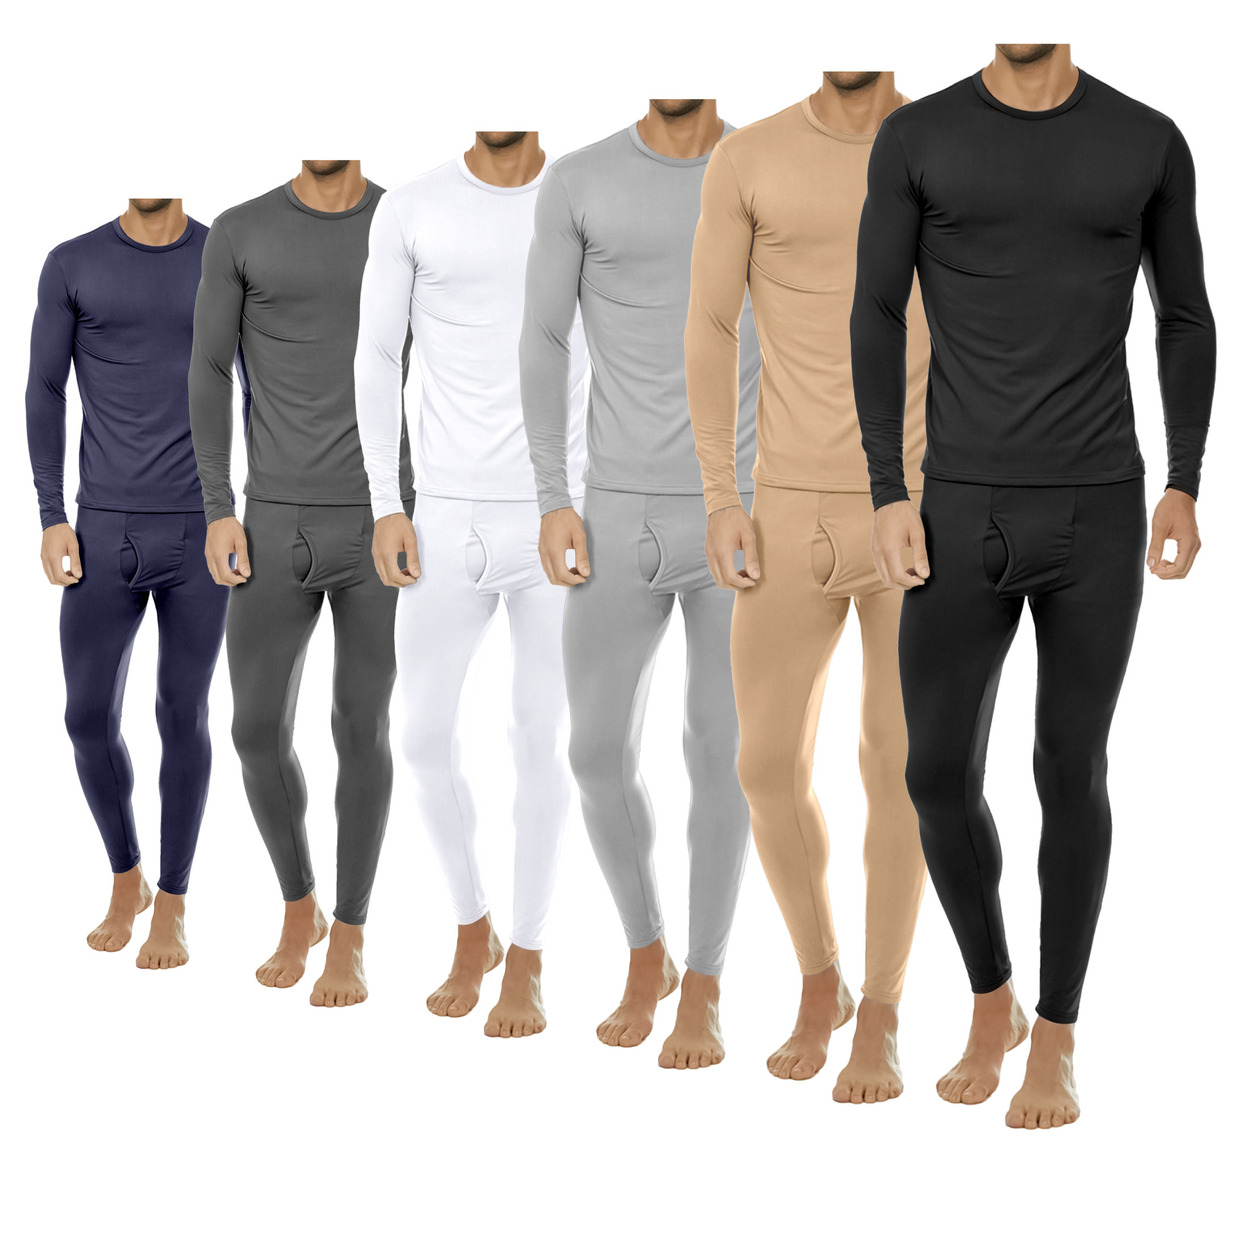 2-Sets: Men's Winter Warm Fleece Lined Thermal Underwear Set For Cold Weather - Grey&grey, Medium